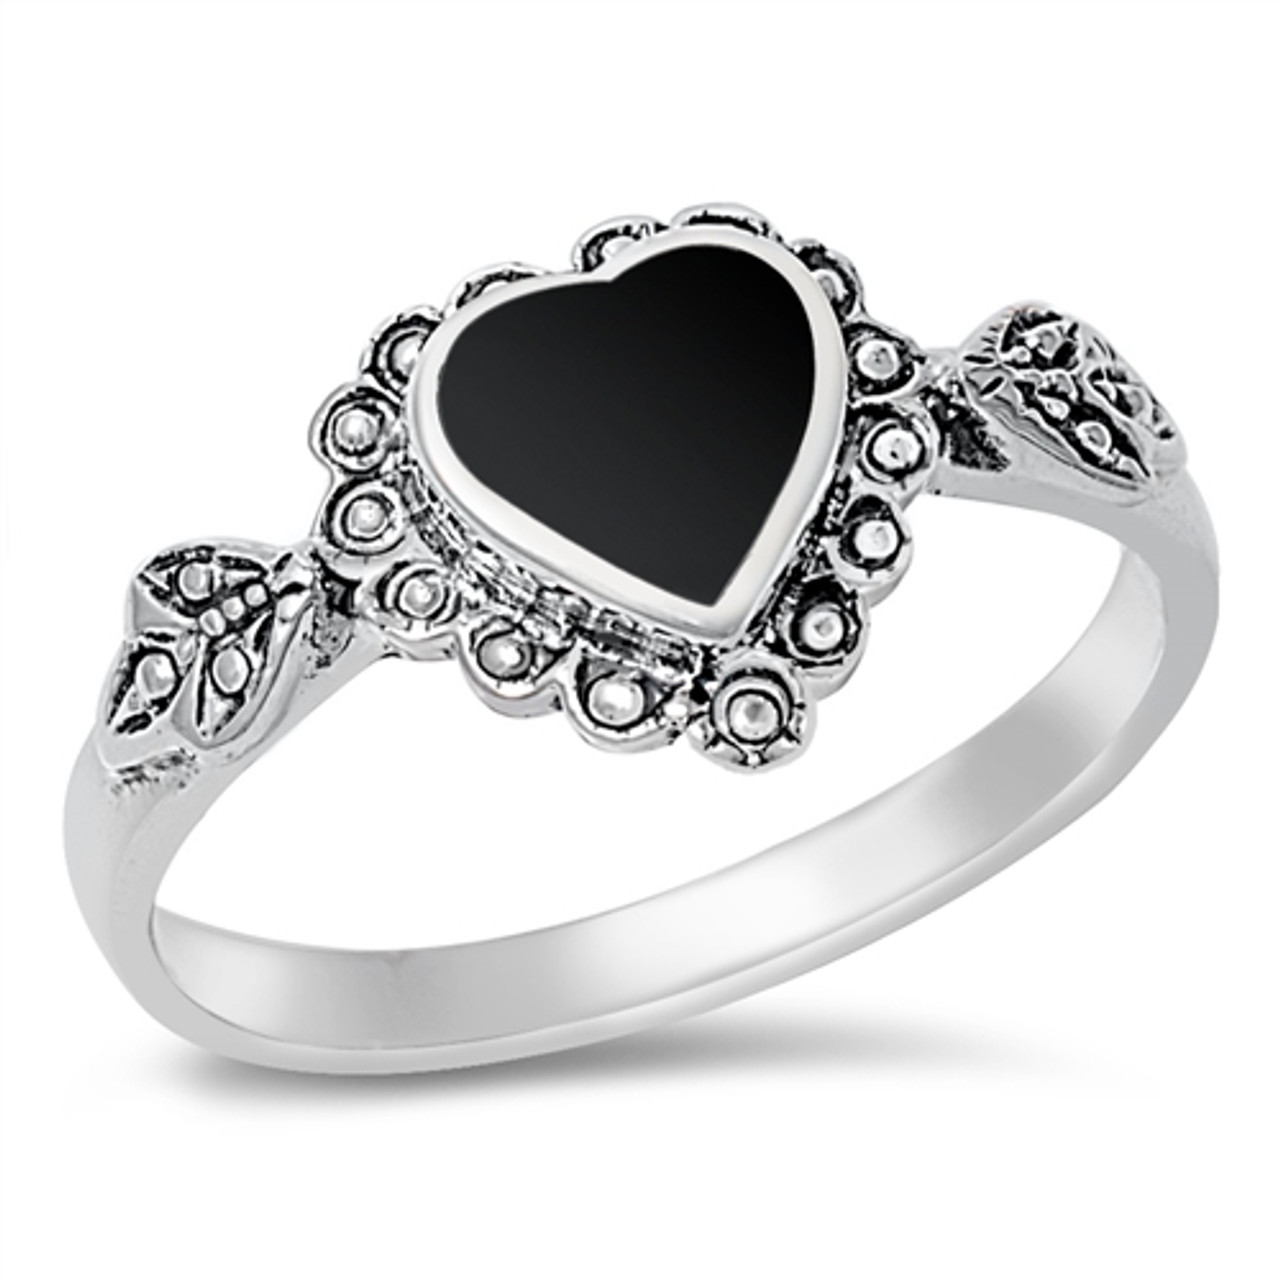 Buy Black Heart Diamond Engagement Ring Sterling Silver Black CZ Vintage  Wedding Bridal Promise Ring Set for Women Anniversary Gift Online in India  - Etsy